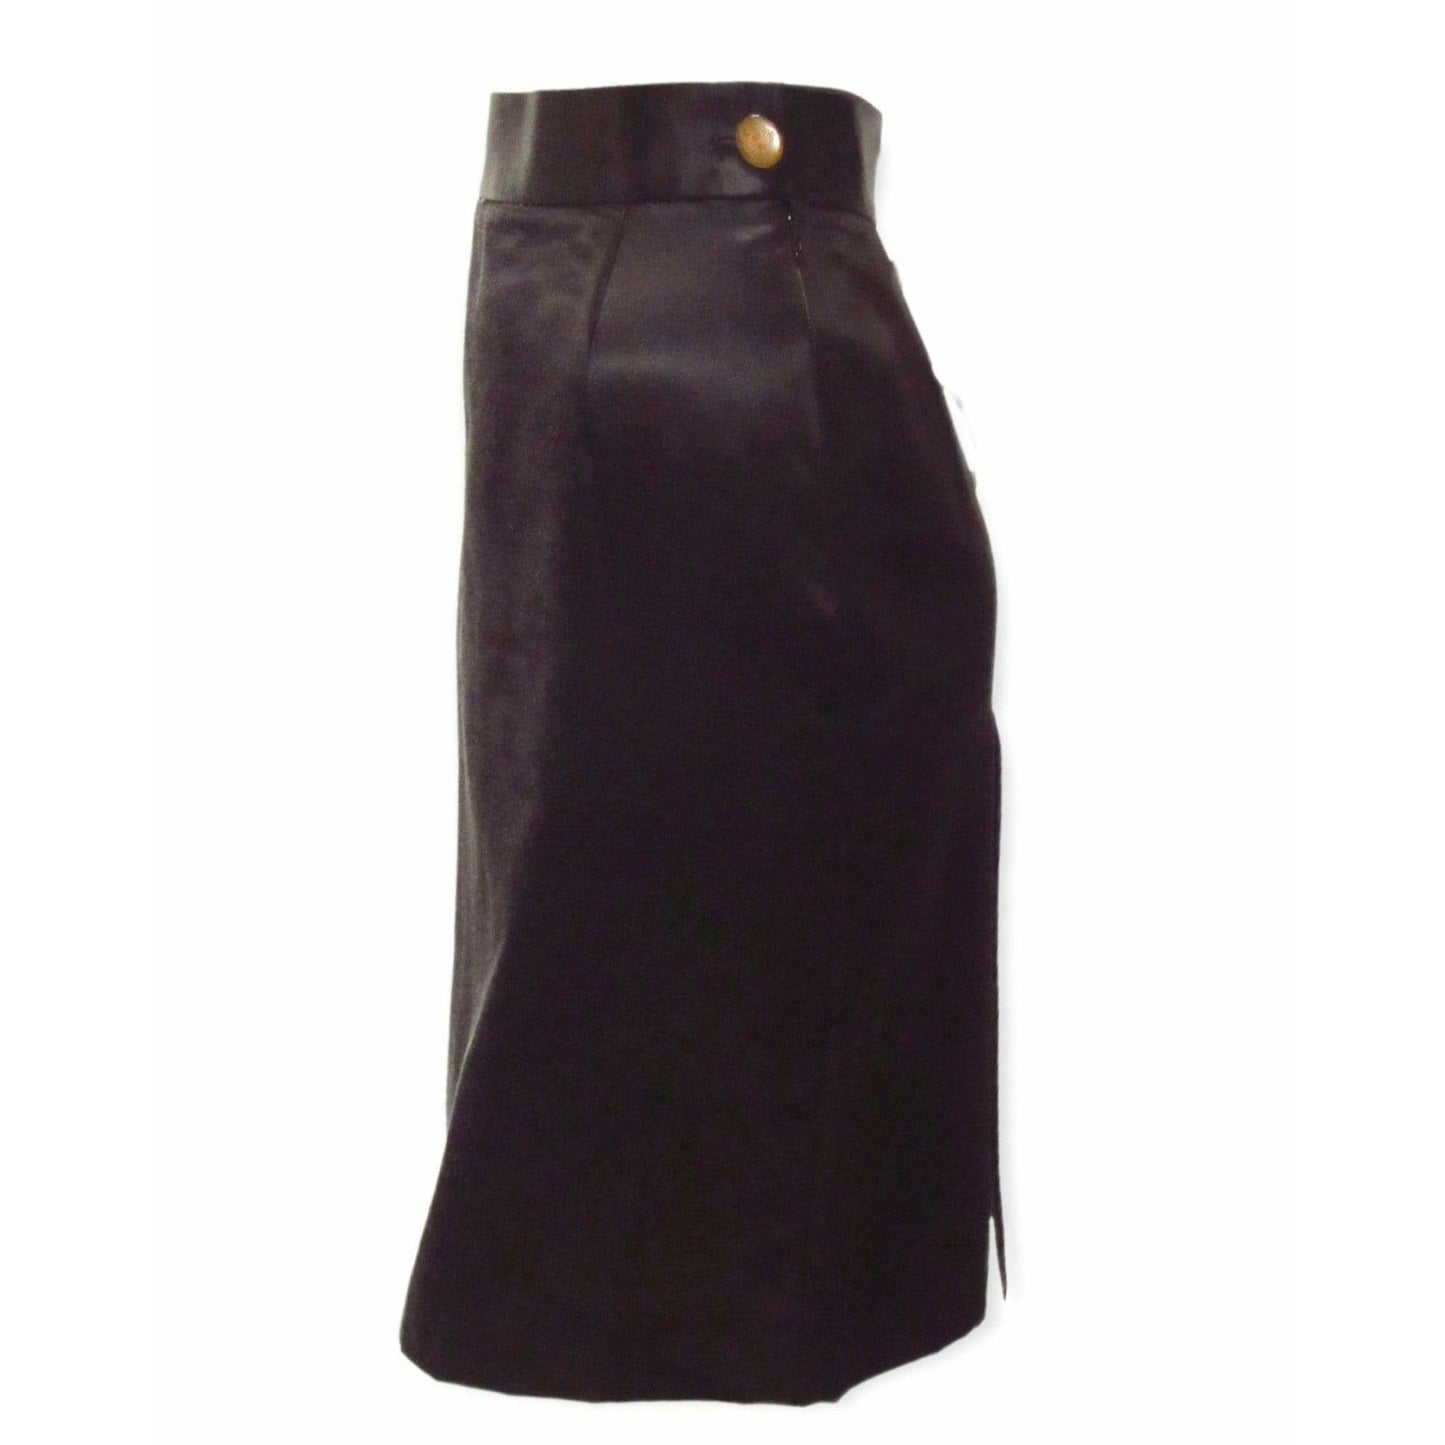 vivienne-westwood-red-label-black-pencil-skirt Skirts Dark Slate Gray